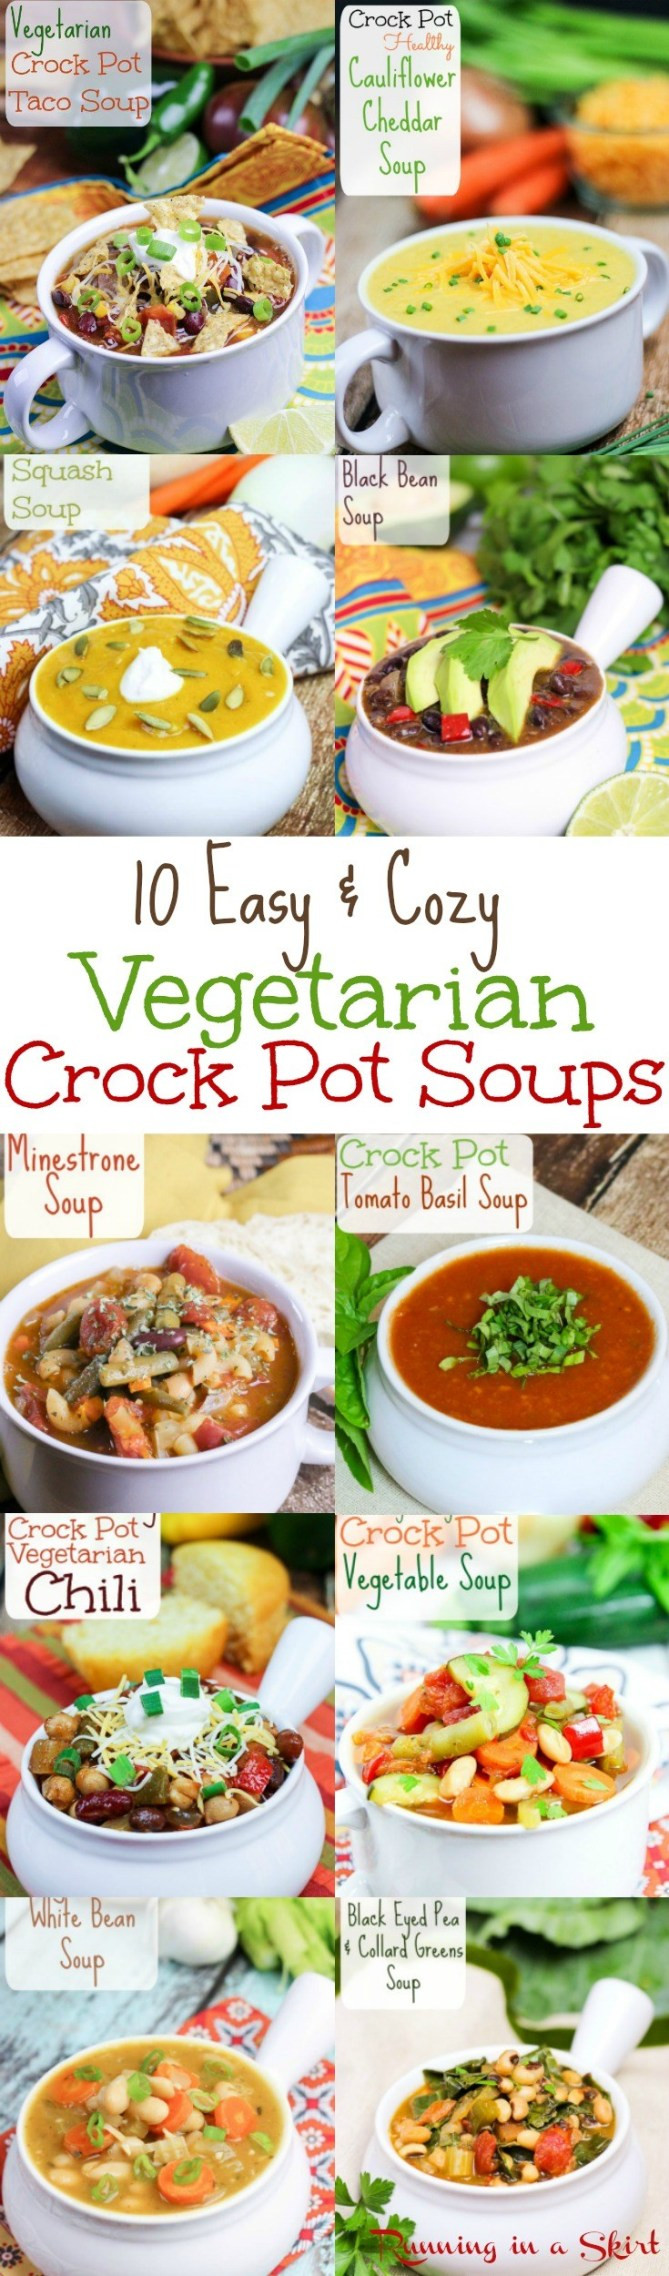 Vegetarian Crockpot Soup Recipes 10 Cozy Ve arian Crock Pot Soup recipes